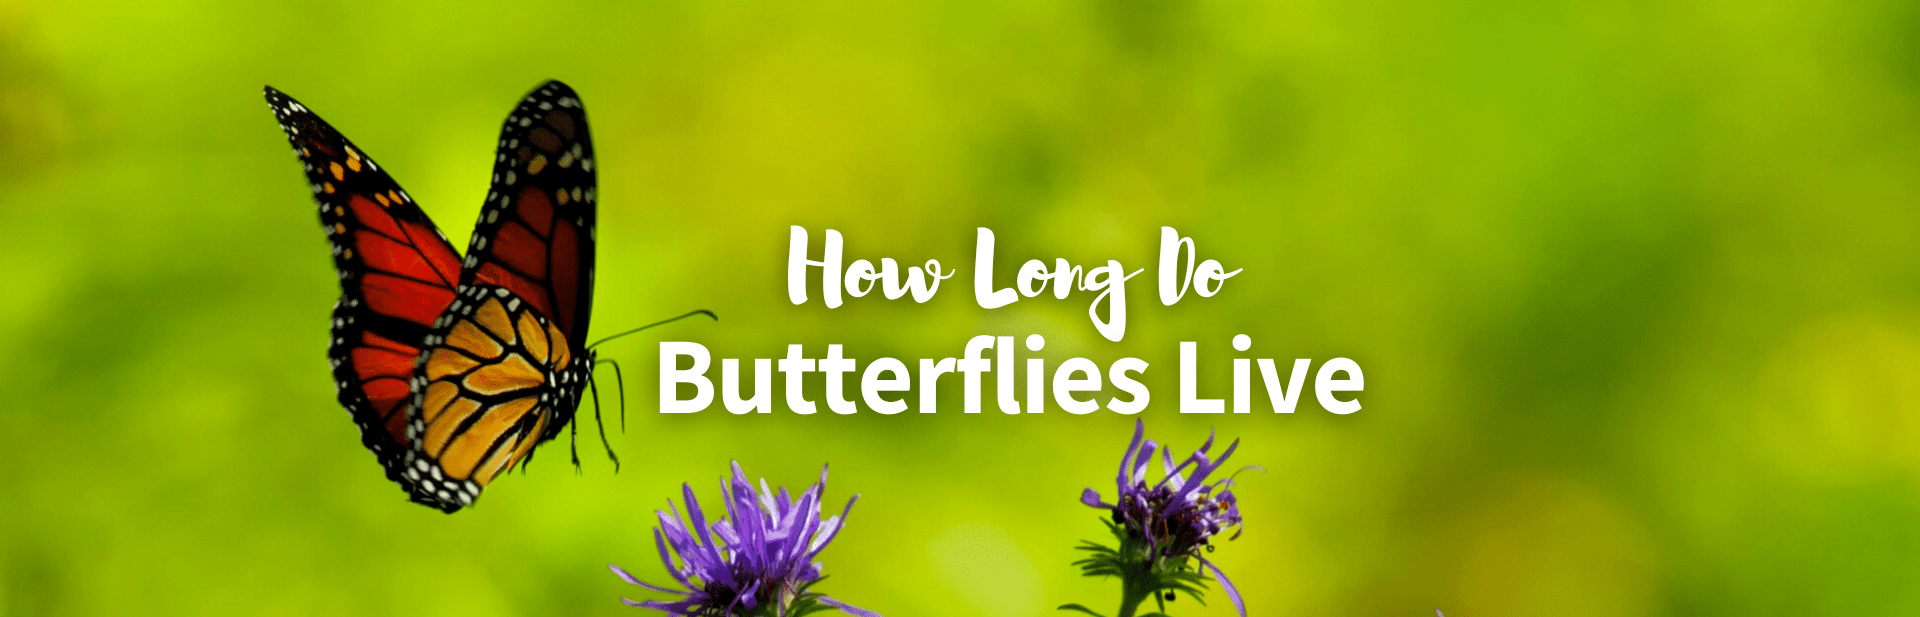 How Long Do Butterflies Live? Not as Long as You’d Think!